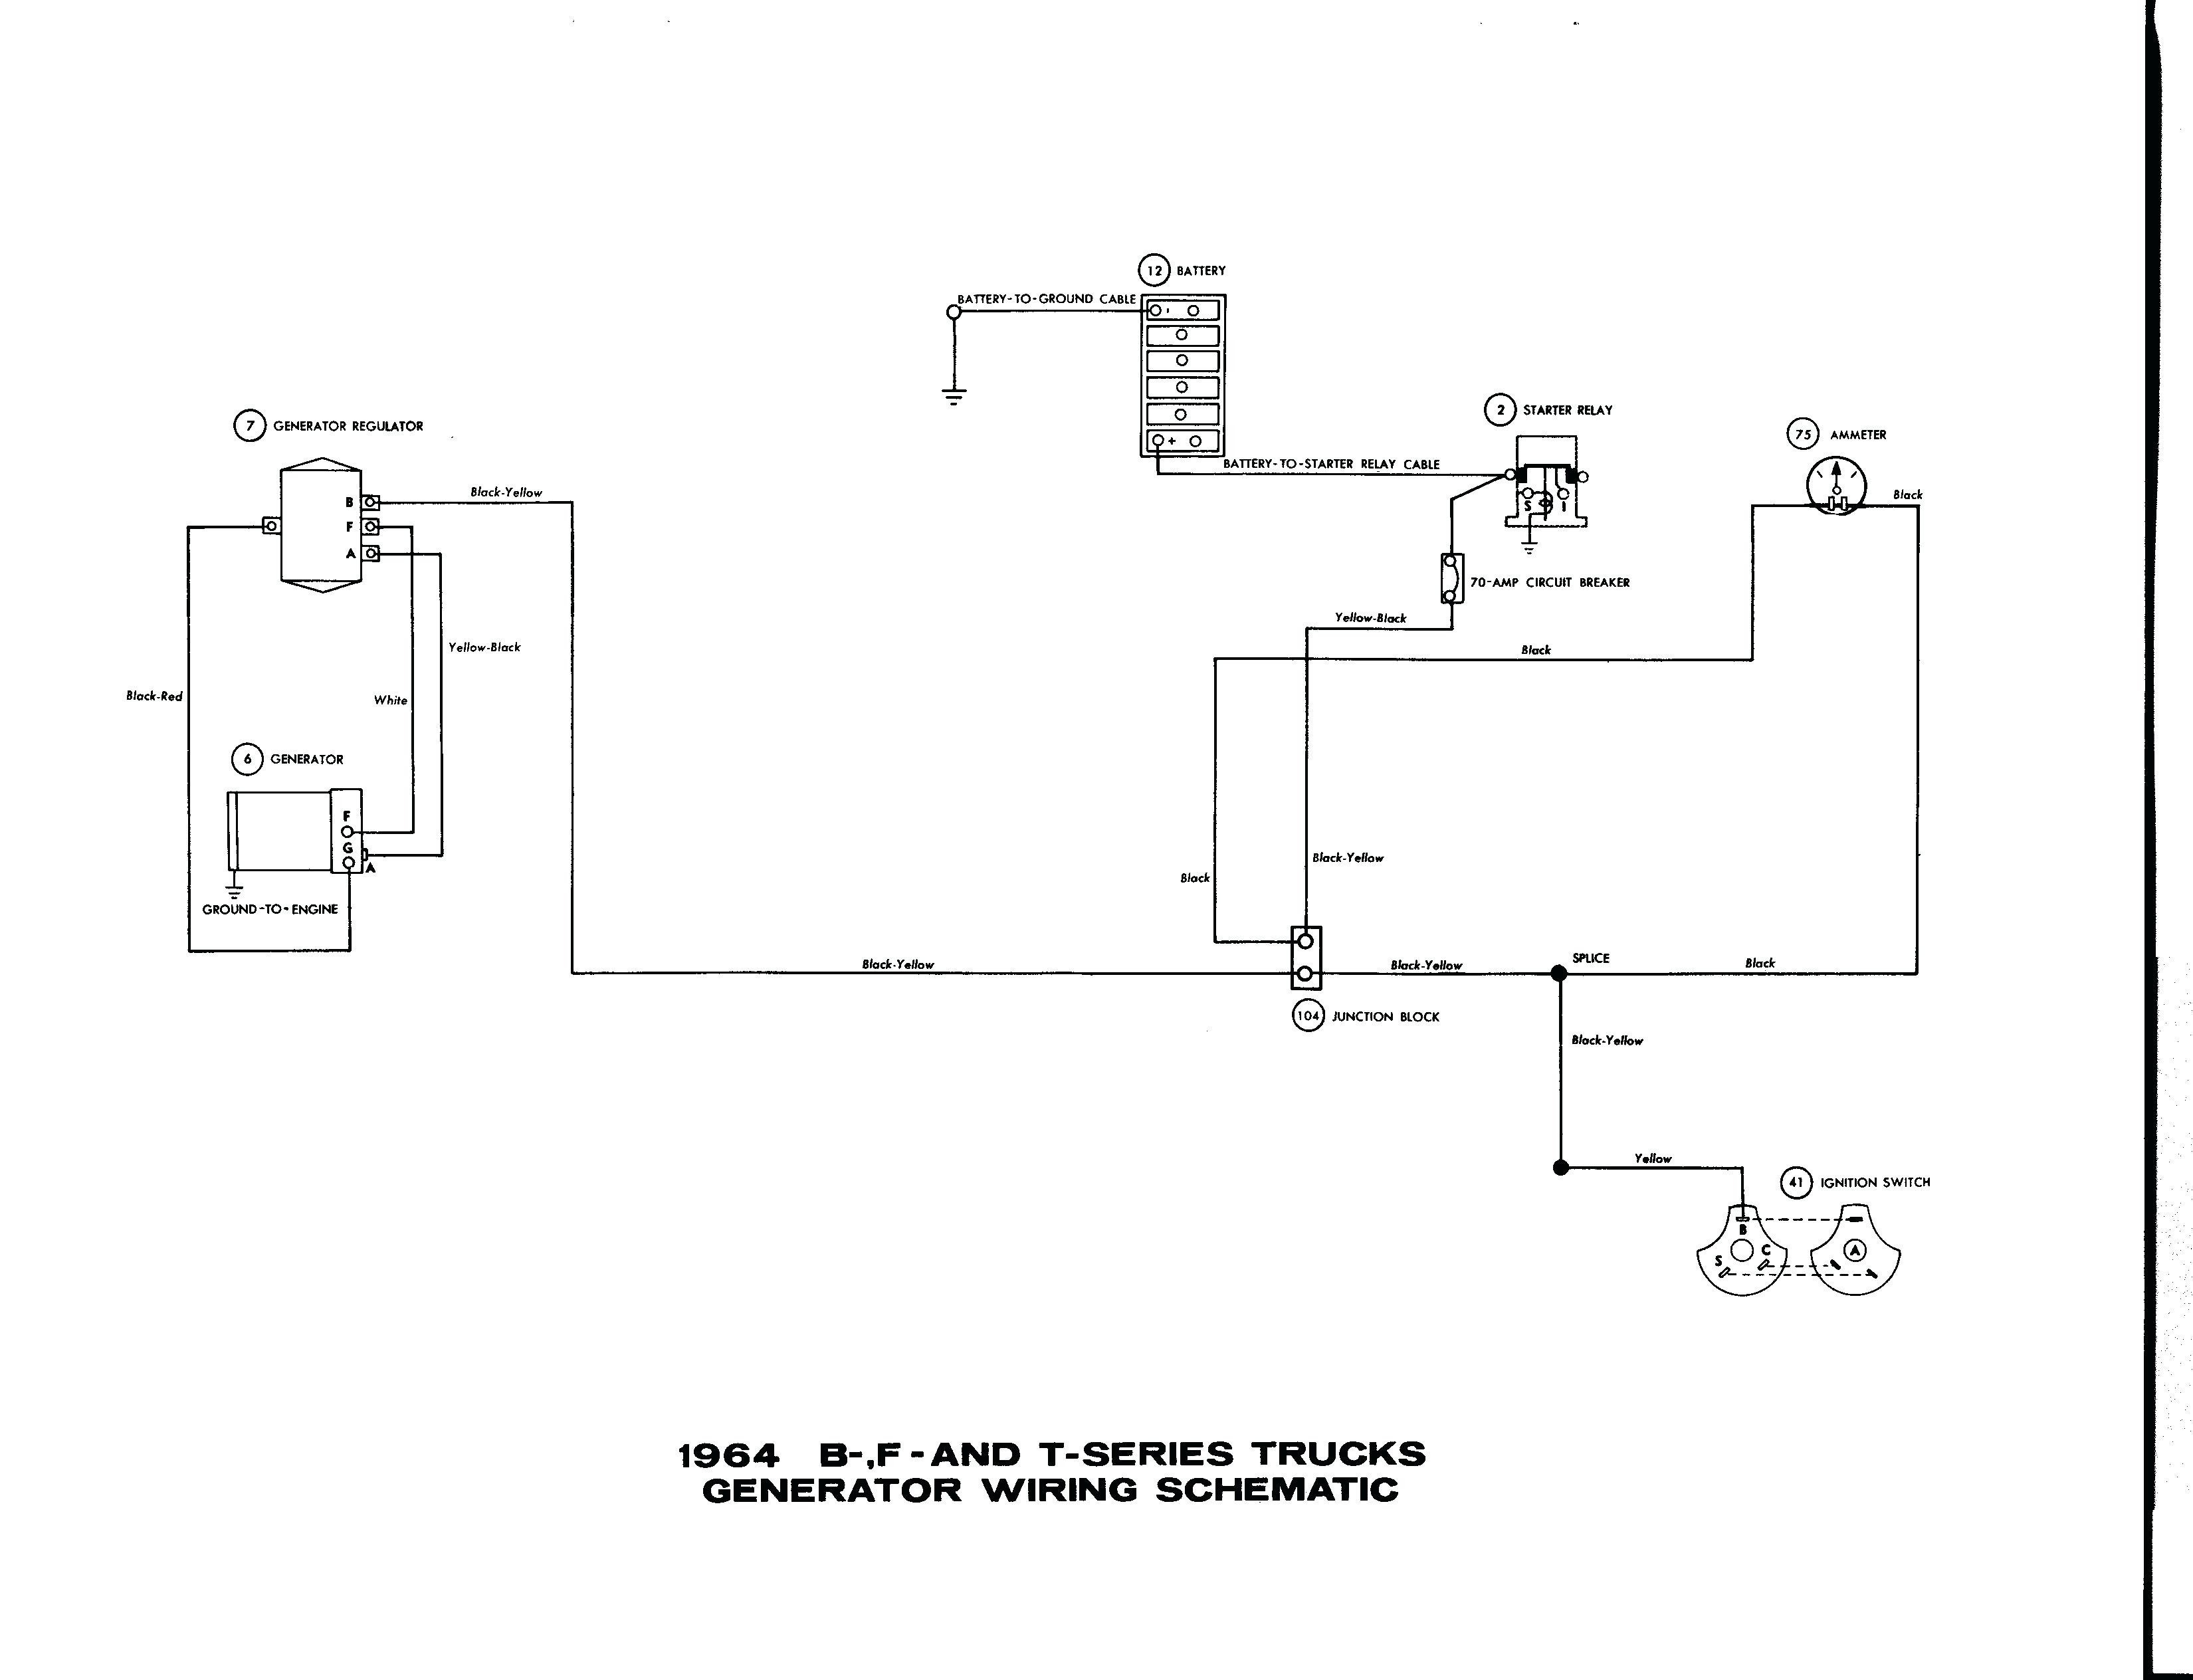 Wiring Diagram for Alternator with Internal Regulator Valid Arco Alternator Wiring Diagram New ford Alternator Wiring